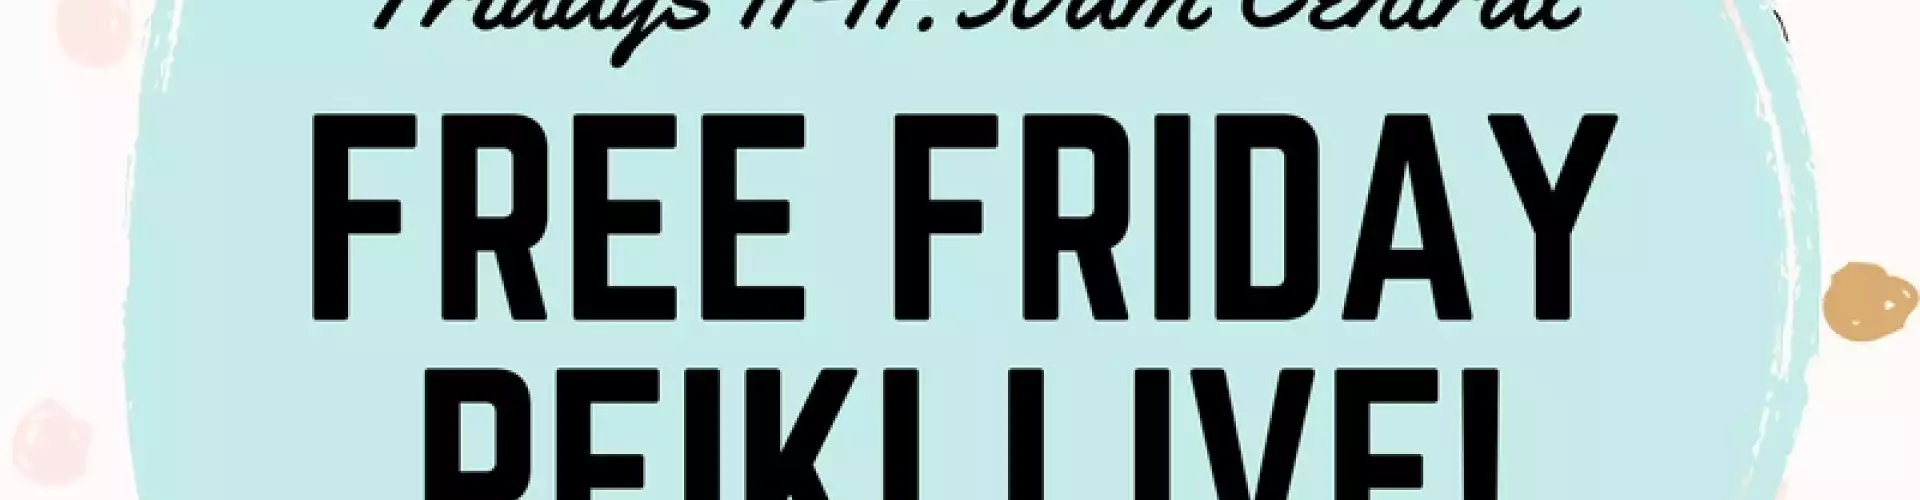 Friday Reiki Live! 